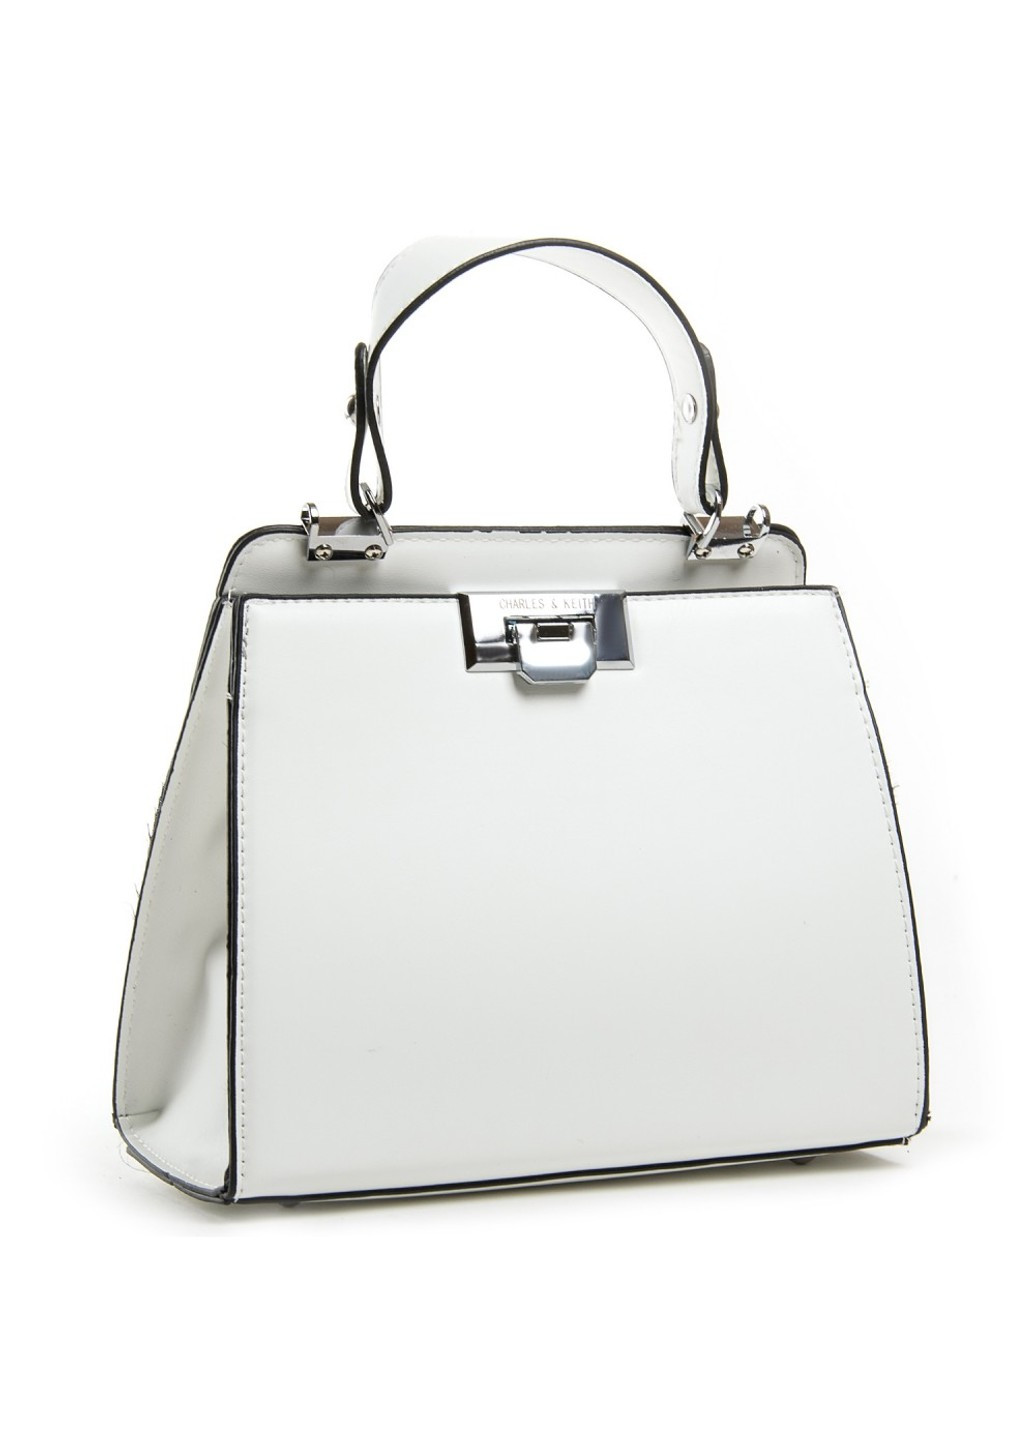 Женская сумочка из кожезаменителя 04-02 11003 white Fashion (261486788)